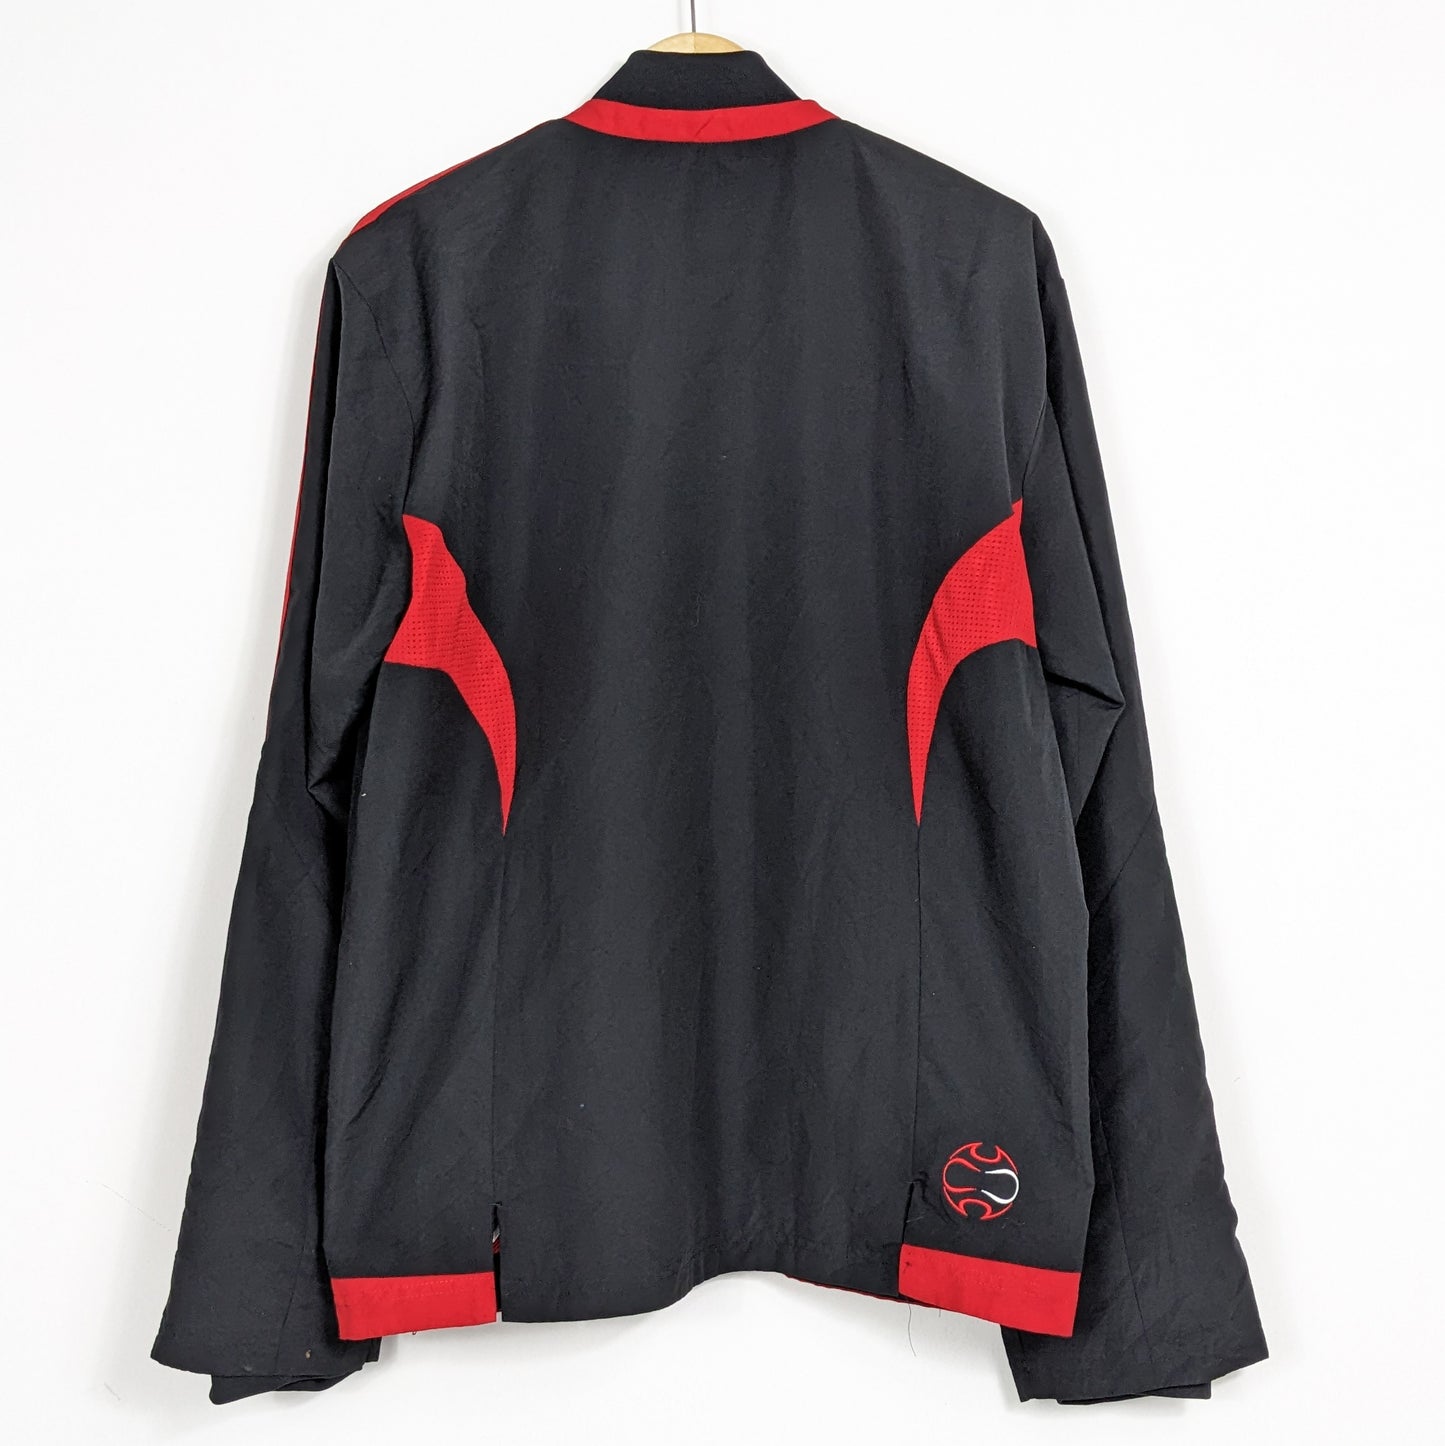 Authentic AC Milan Formotion Jacket 2007 - Size M